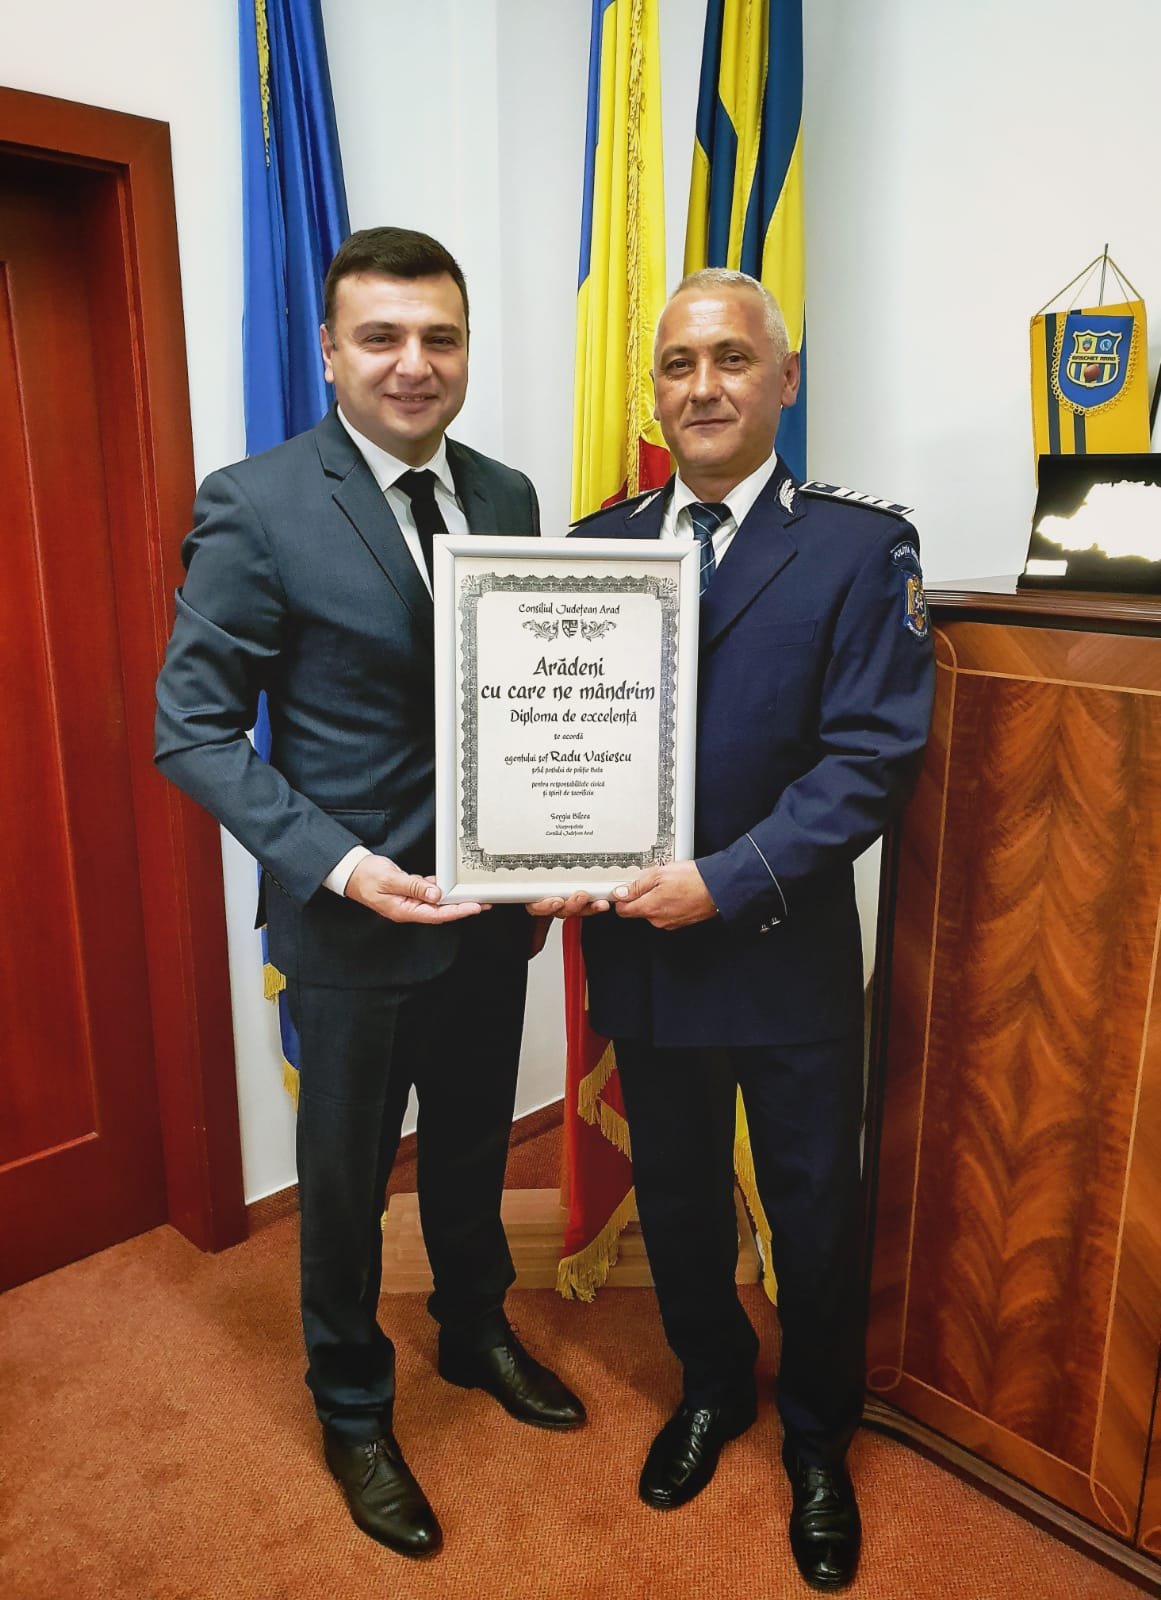 Poliţistul salvator Radu Vasiescu a primit diploma  „Arădeni cu care ne mândrim”